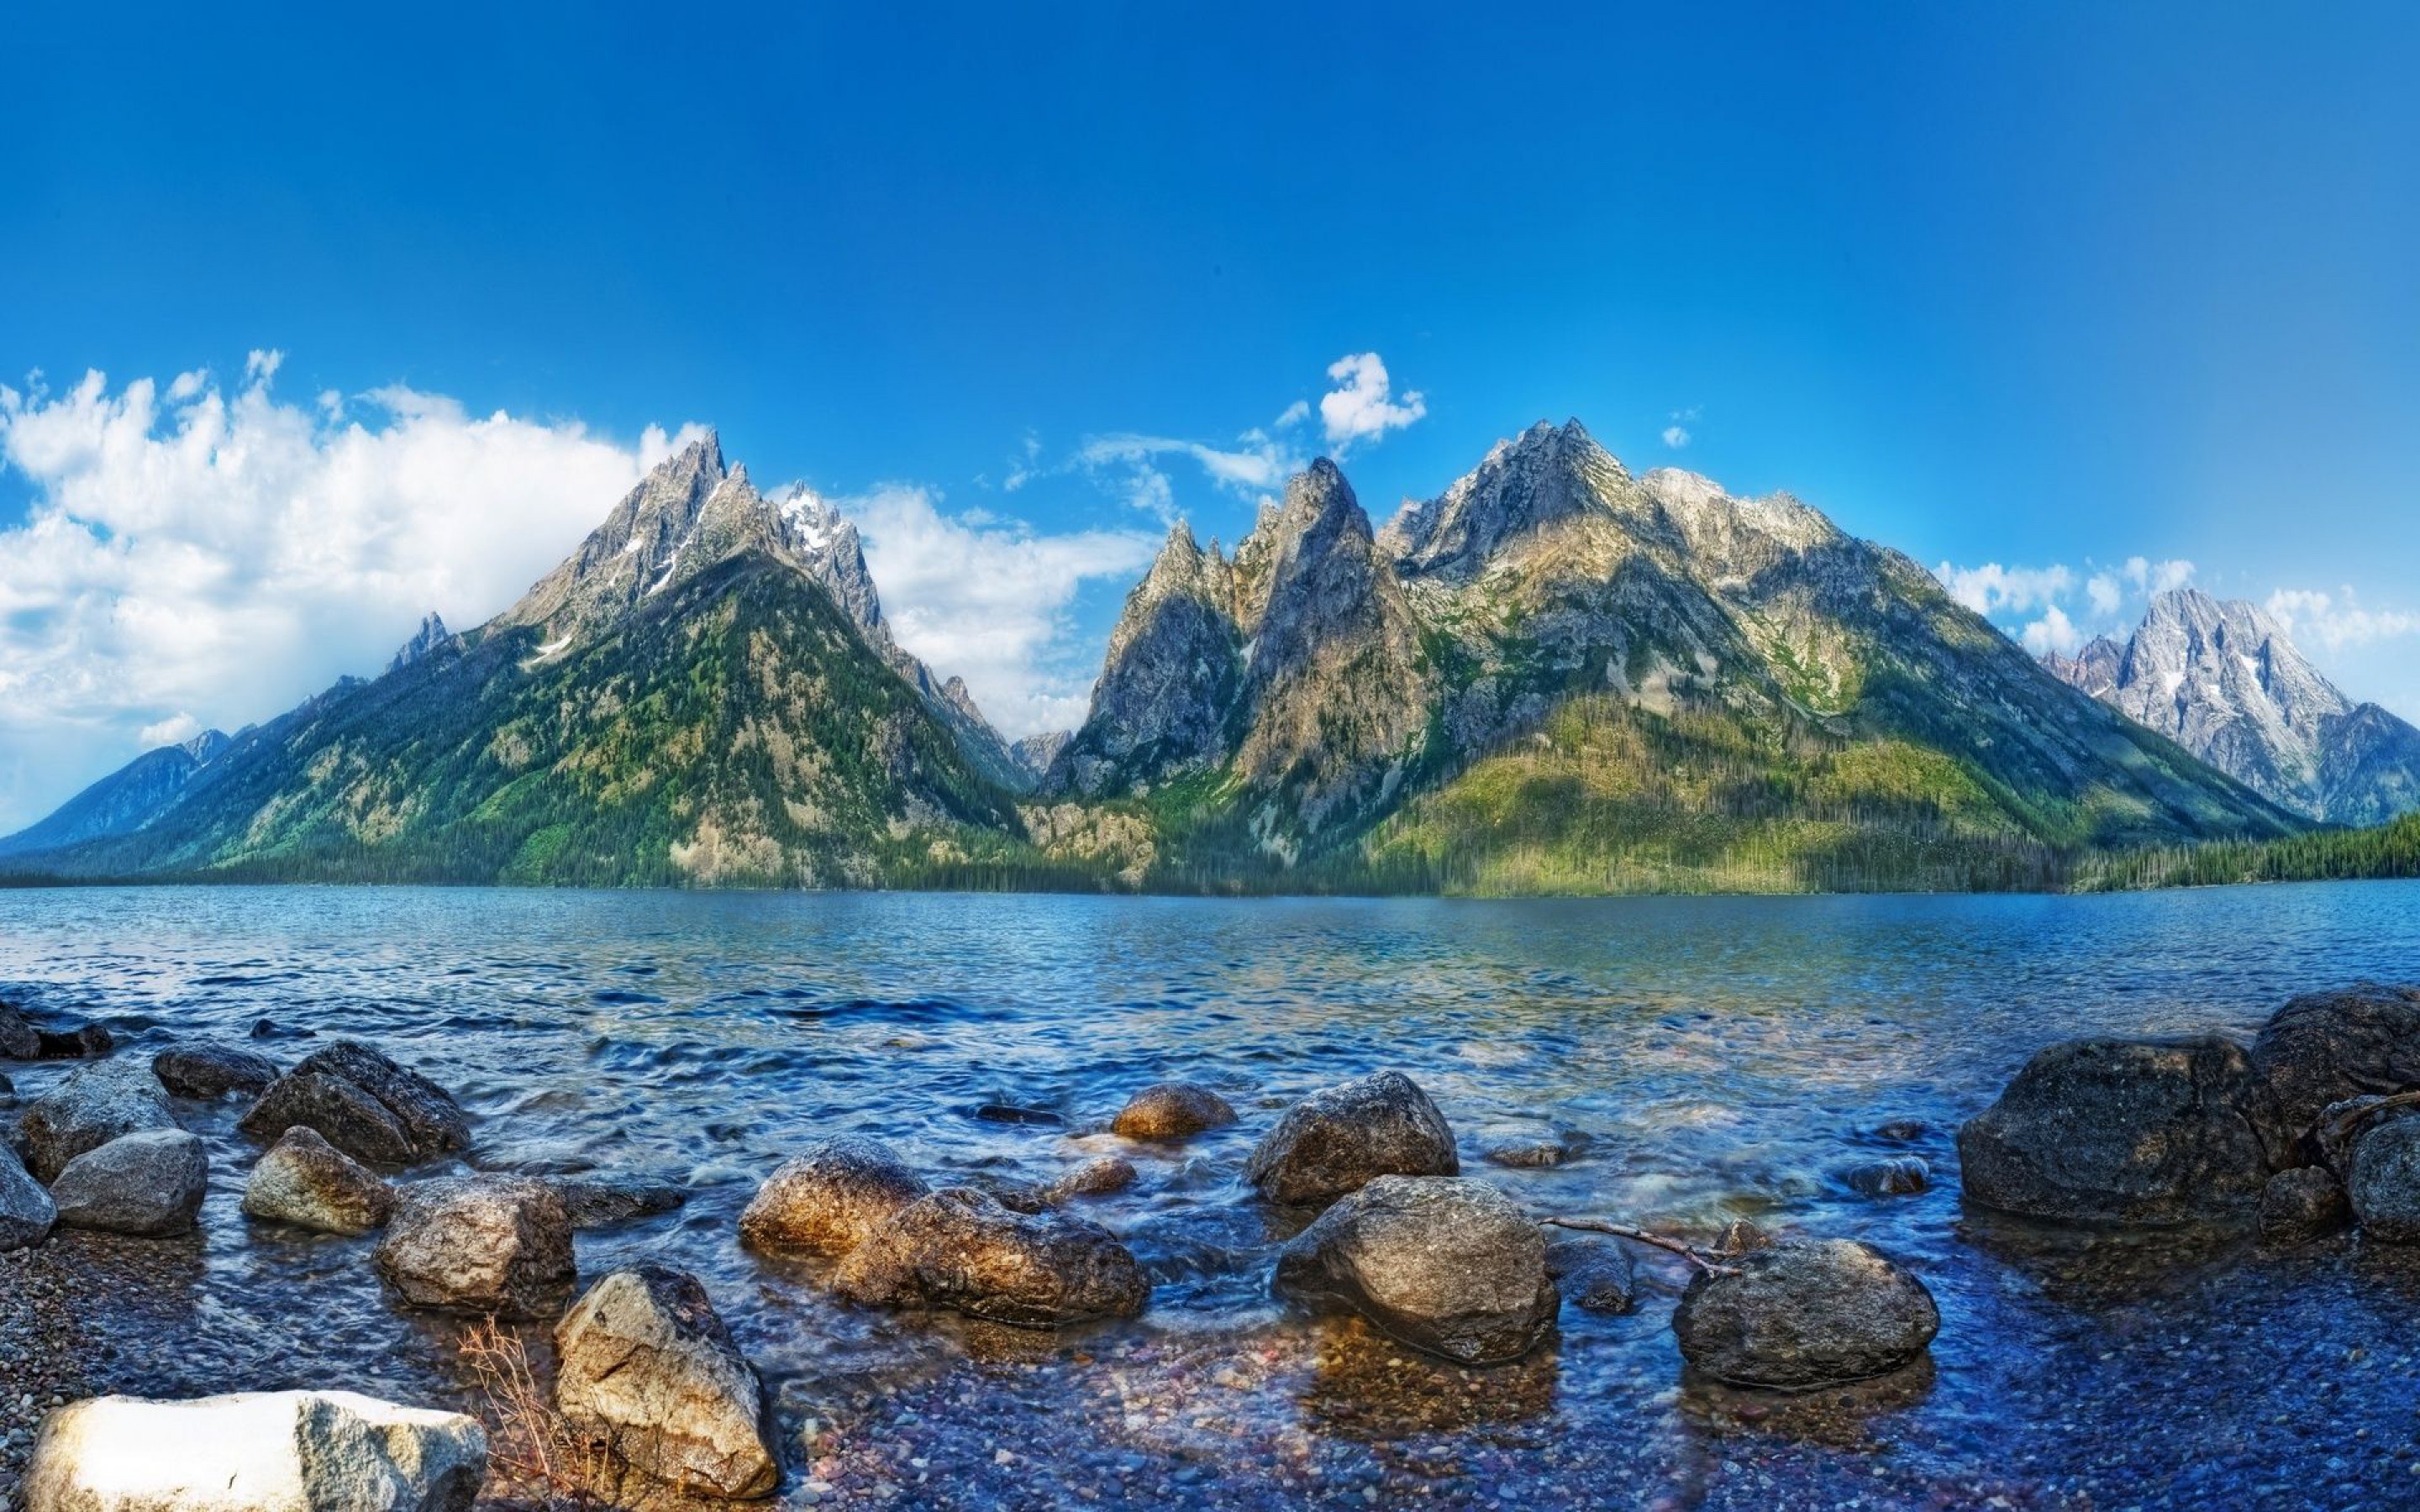 desktop wallpaper hd widescreen free download,natural landscape,mountain,mountainous landforms,nature,body of water